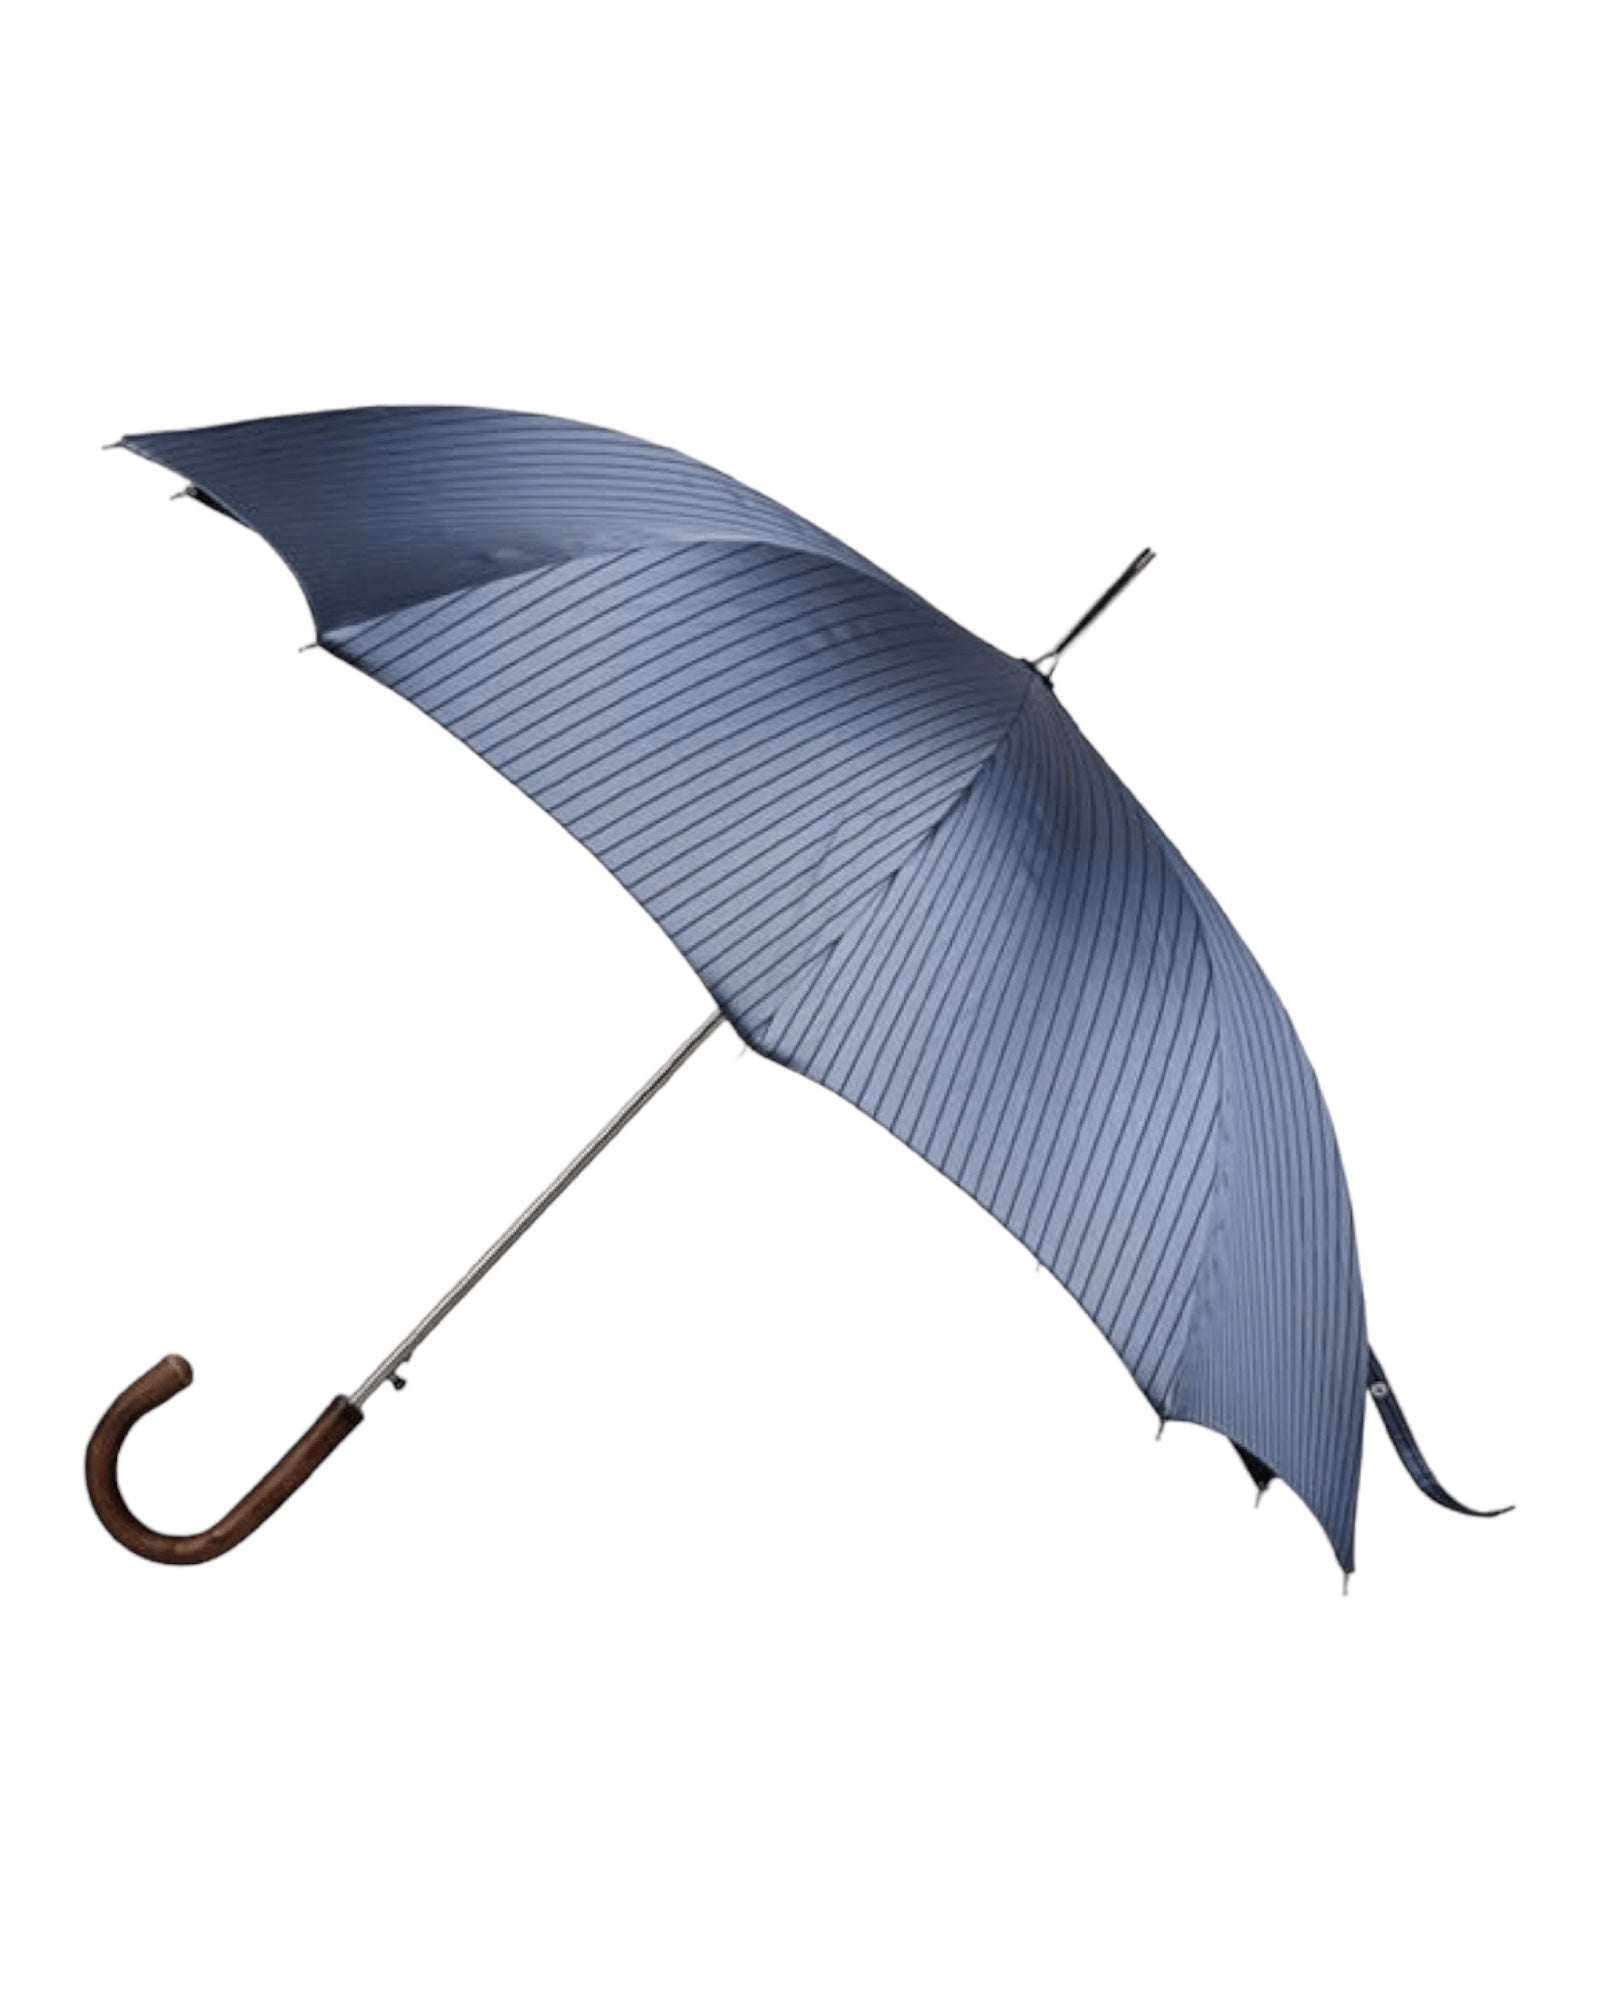 Chestnut Handle Long Umbrella - Blue Steel, Navy Stripes UMBRELLA